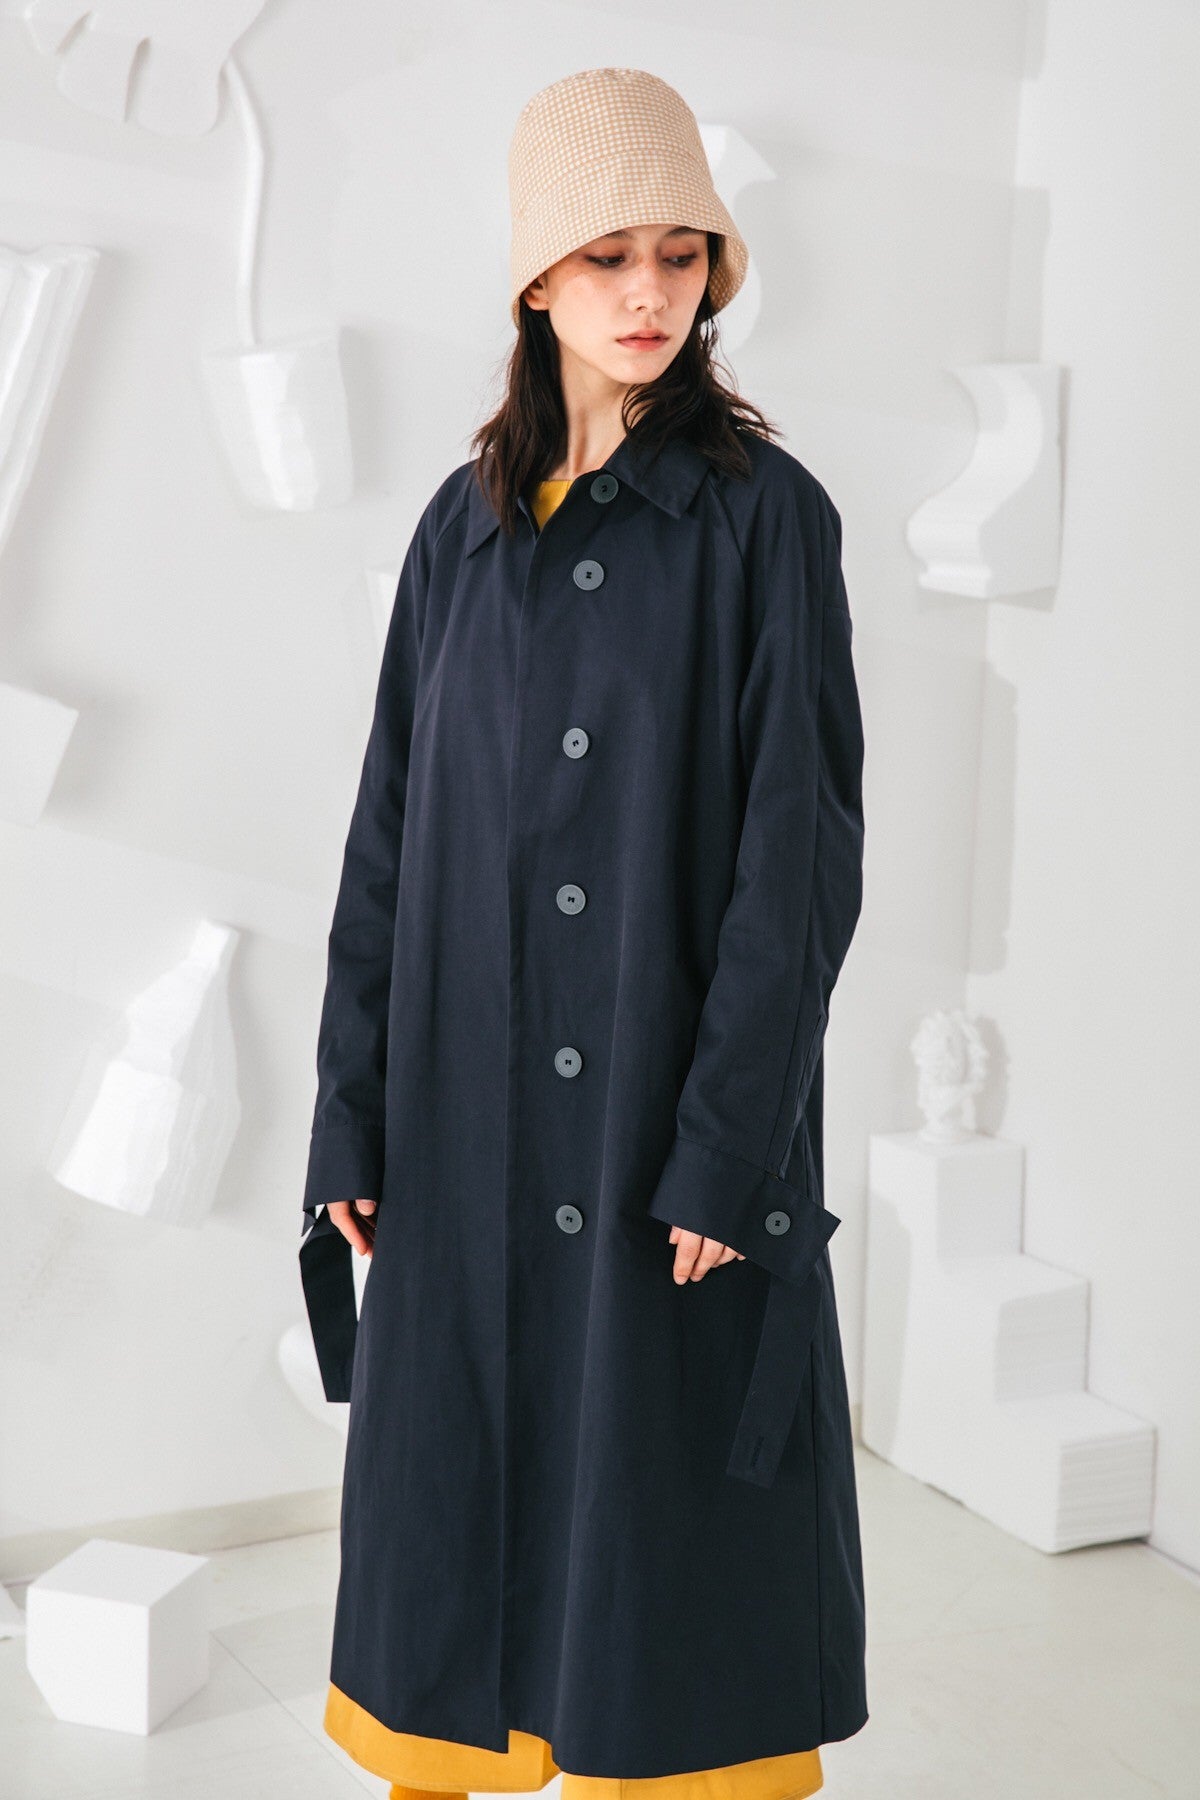 SKYE San Francisco SF shop ethical modern minimalist quality women clothing fashion Coraline Trench Coat blue 2